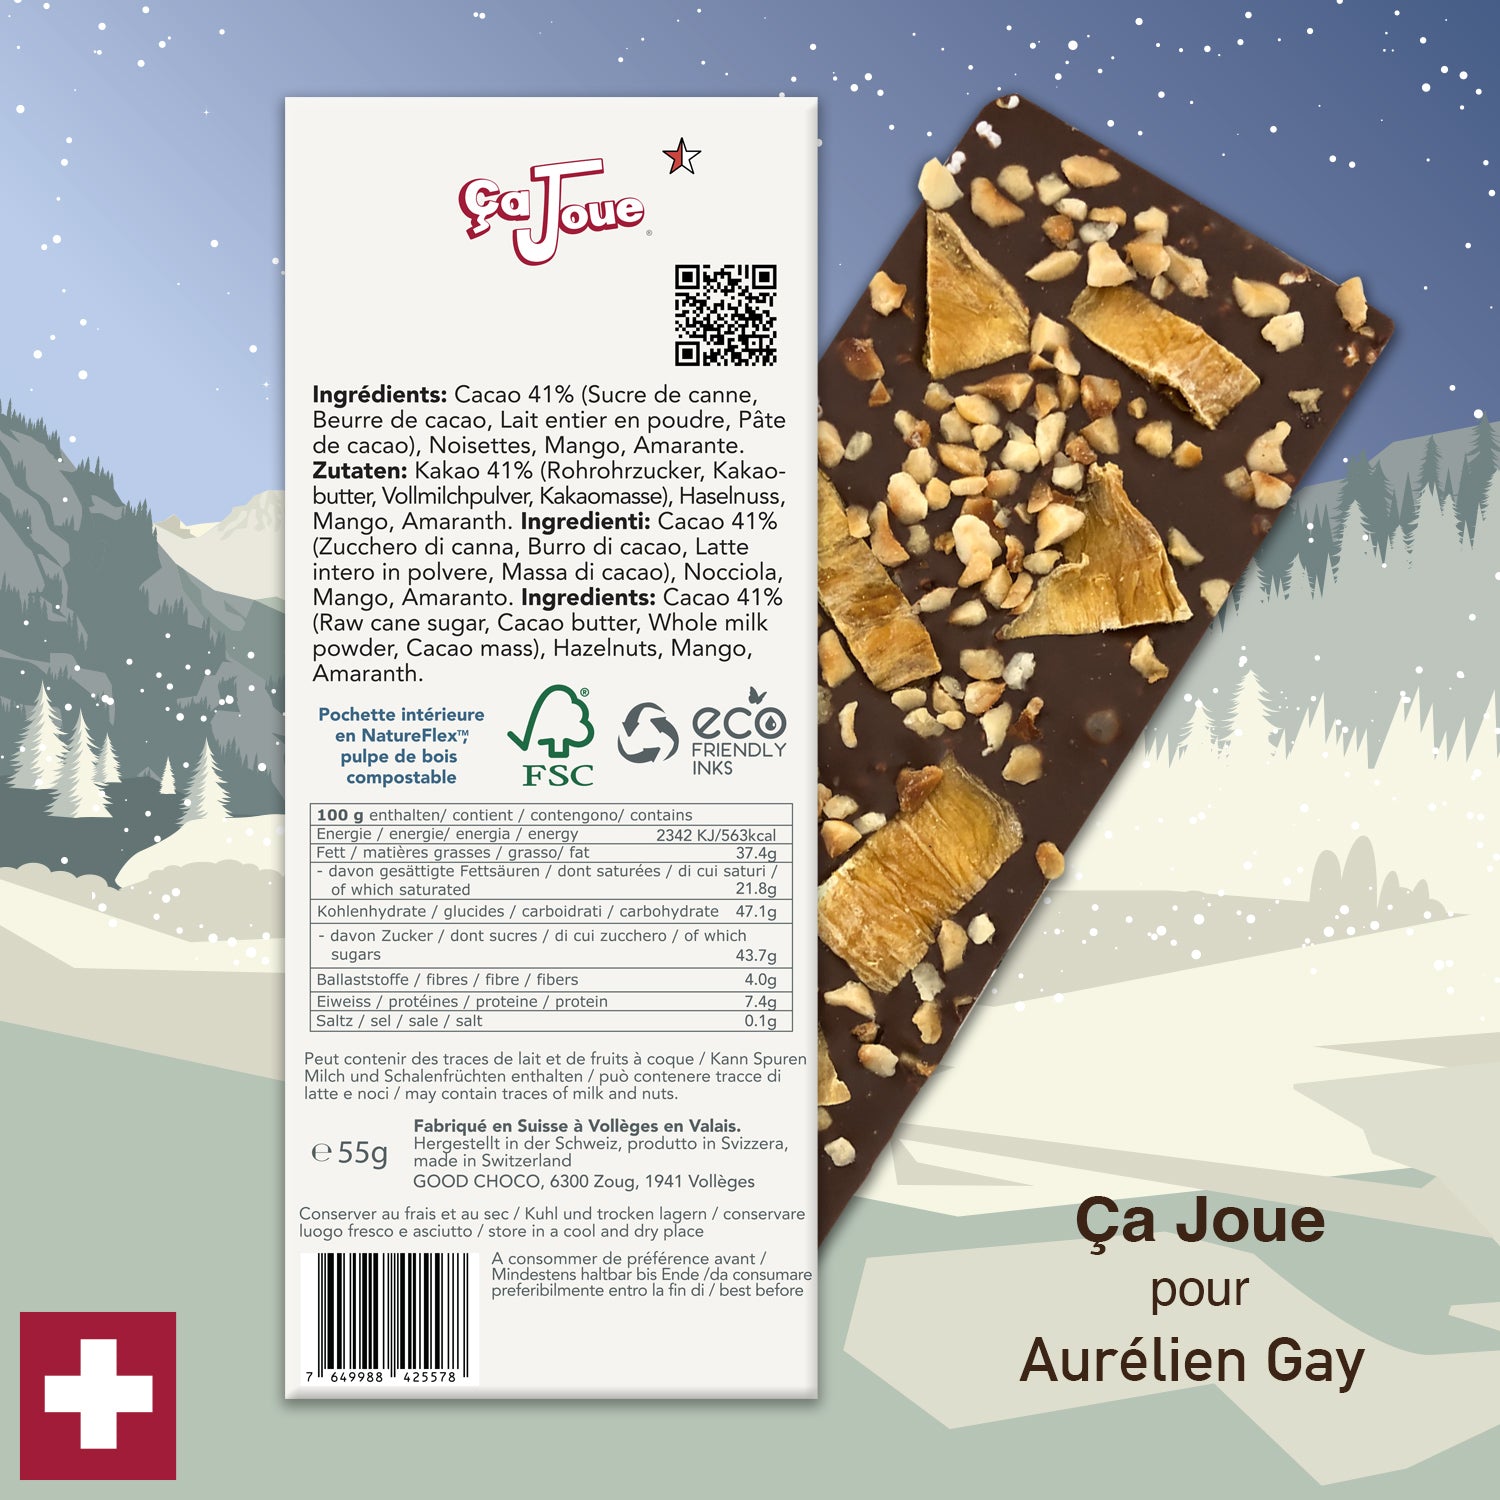 Ça Joue für Aurélien Gay (Ref-BL2) Milchschokolade aus Val de Bagnes